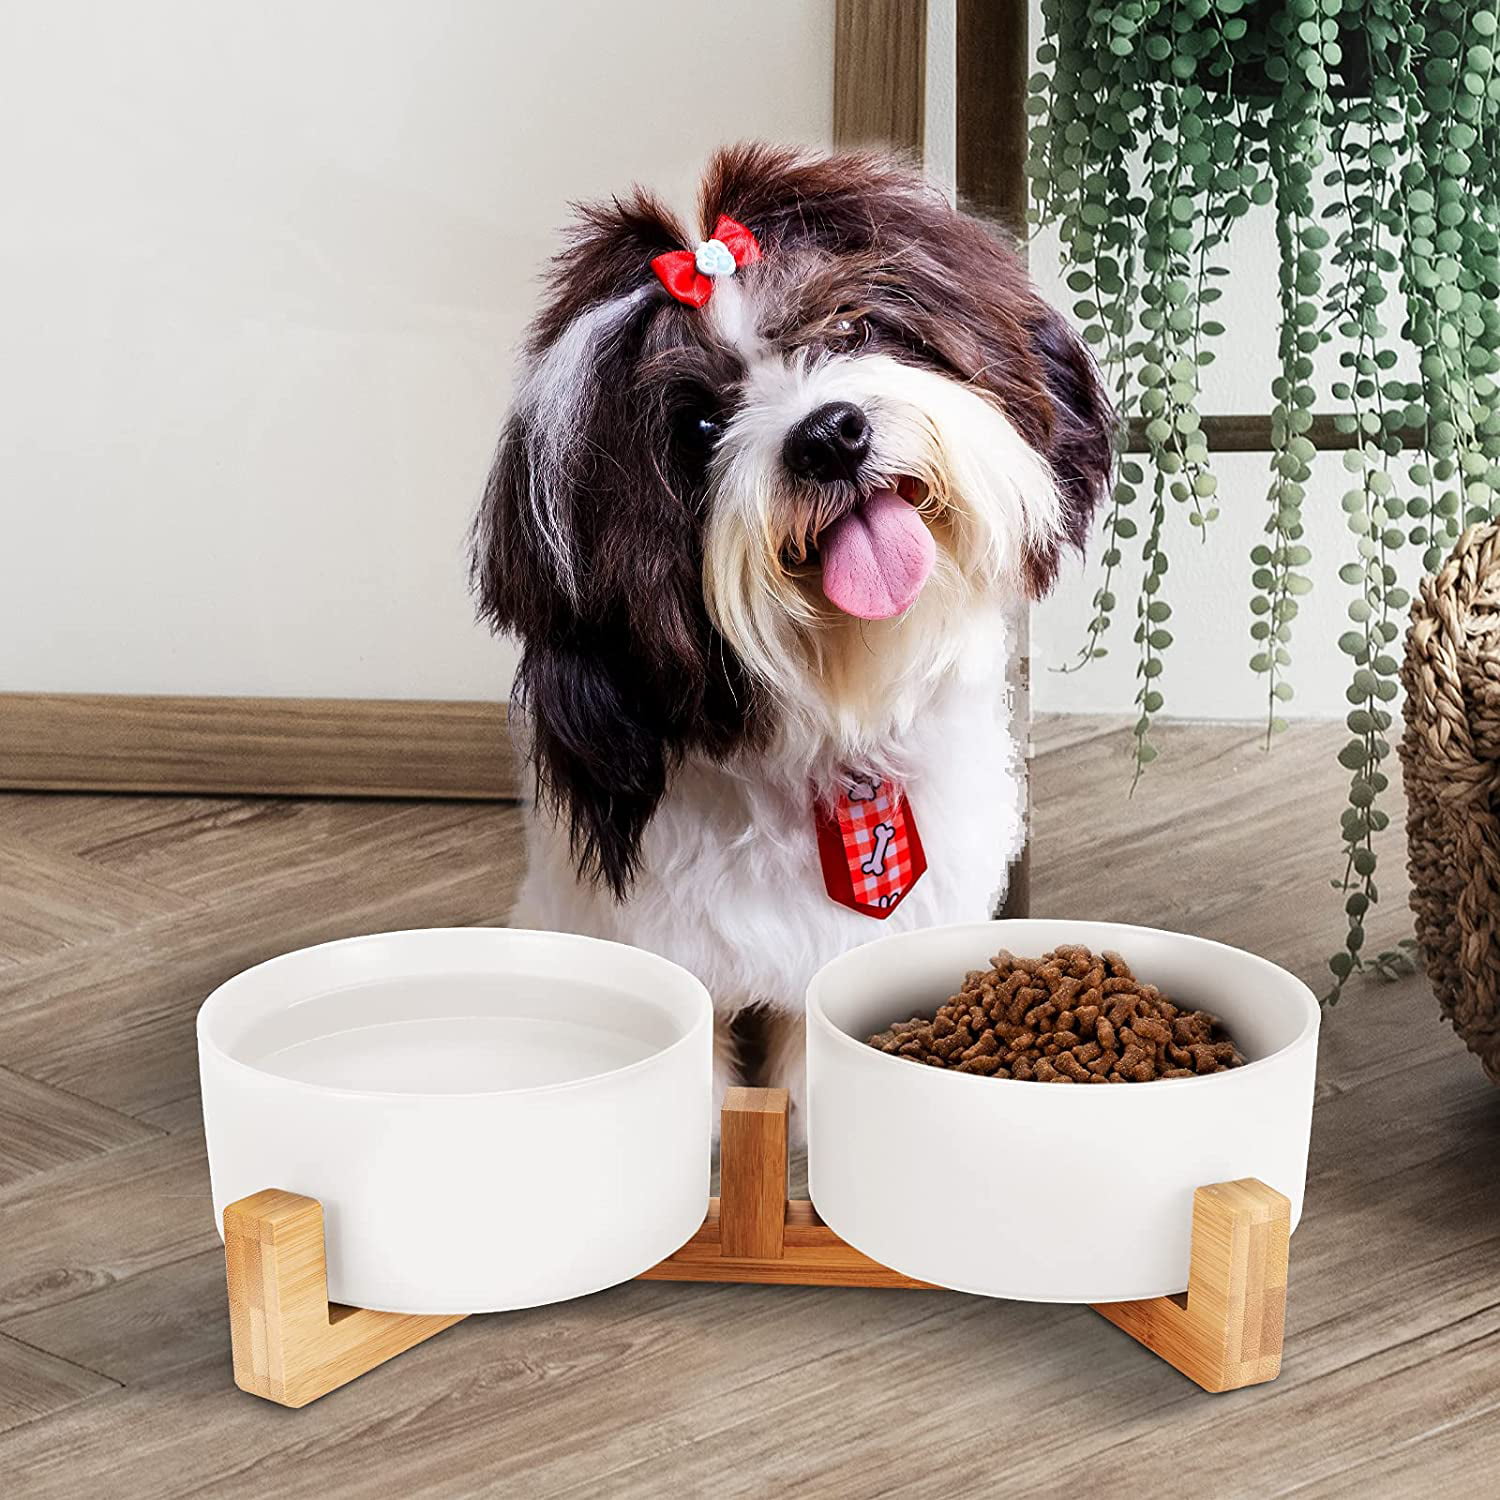 Ware Best Buy Bowl Large Pet Bowl – Pet Food Center